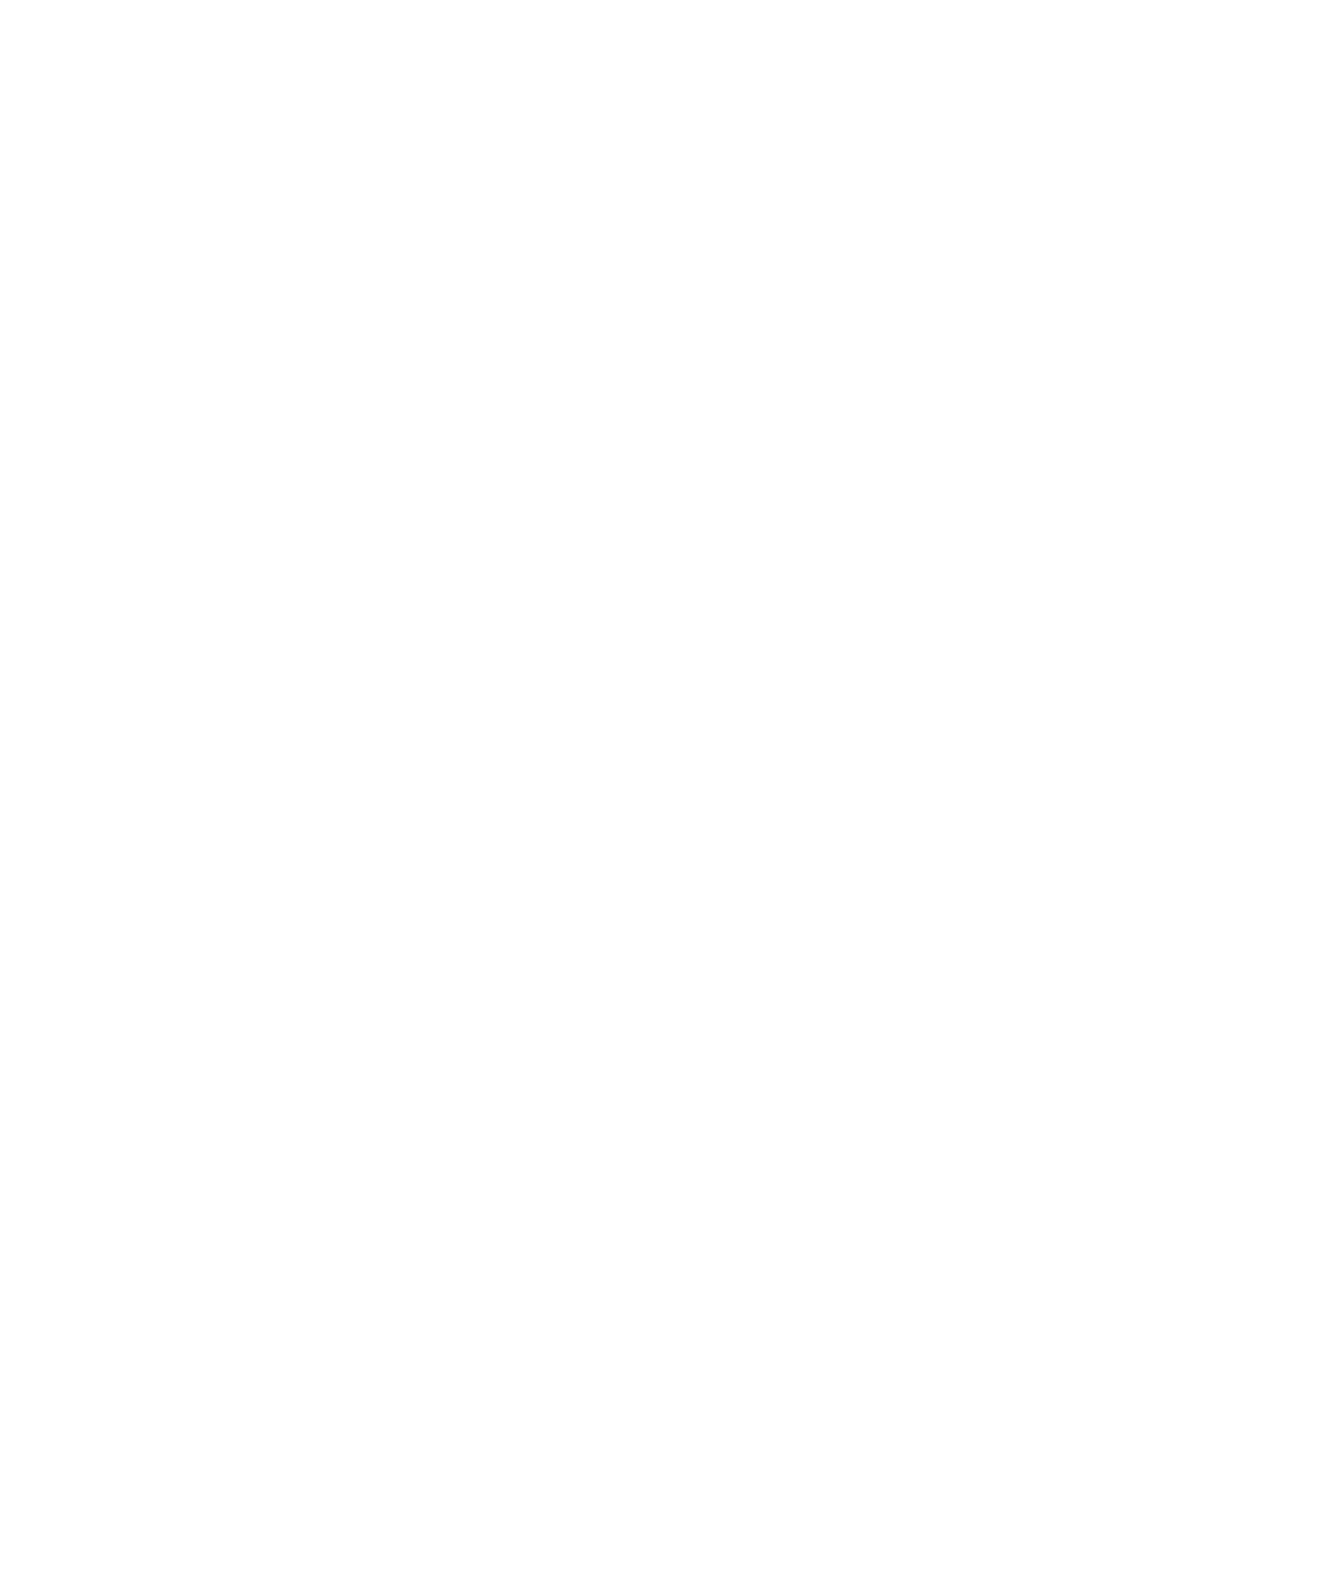 Beach Energy logo pour fonds sombres (PNG transparent)